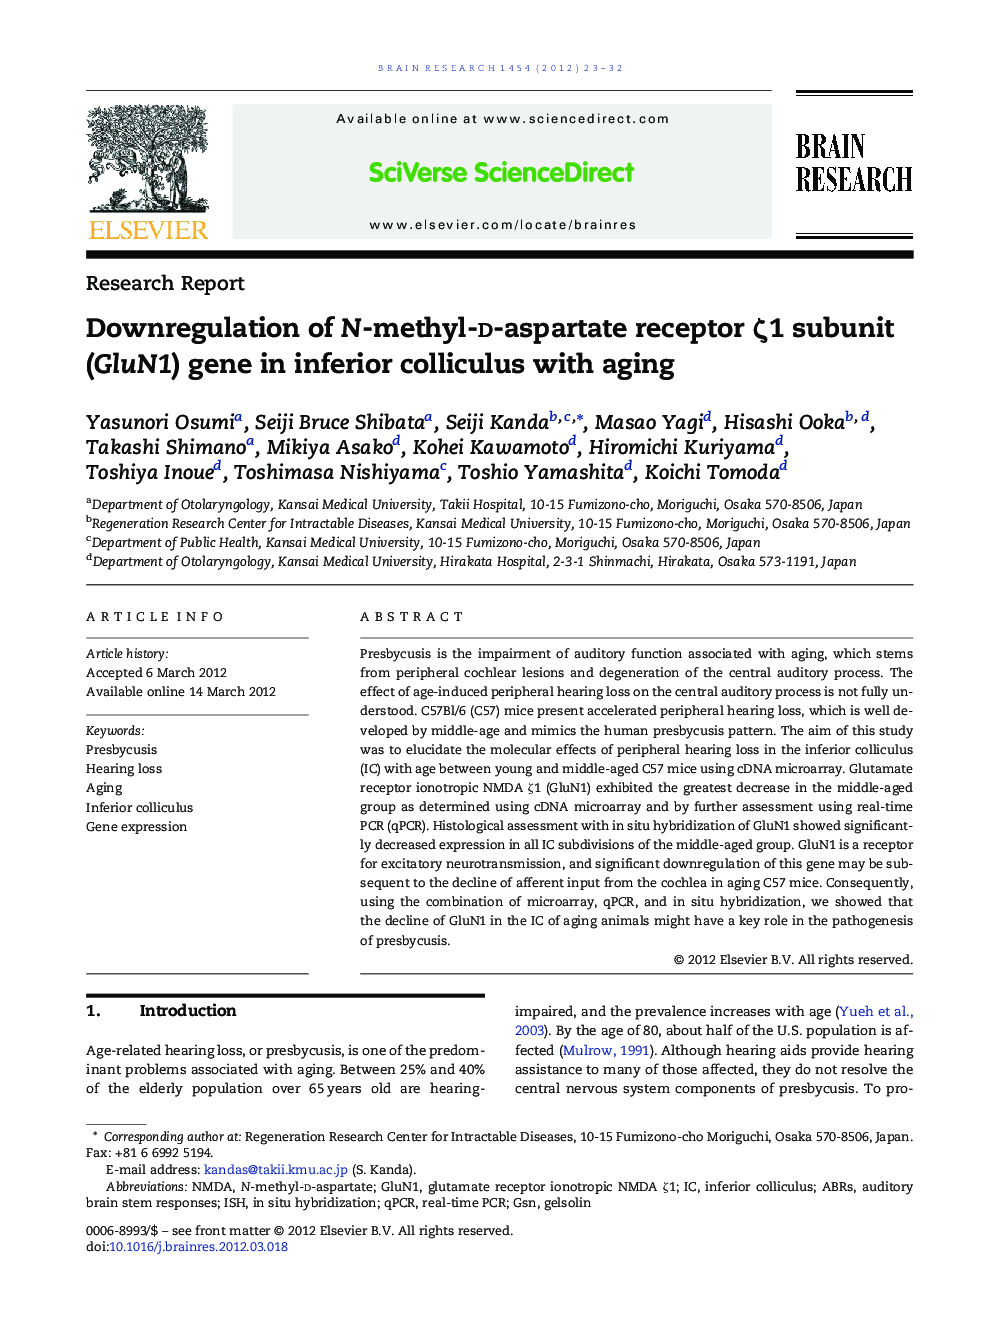 Downregulation of N-methyl-d-aspartate receptor ζ1 subunit (GluN1) gene in inferior colliculus with aging